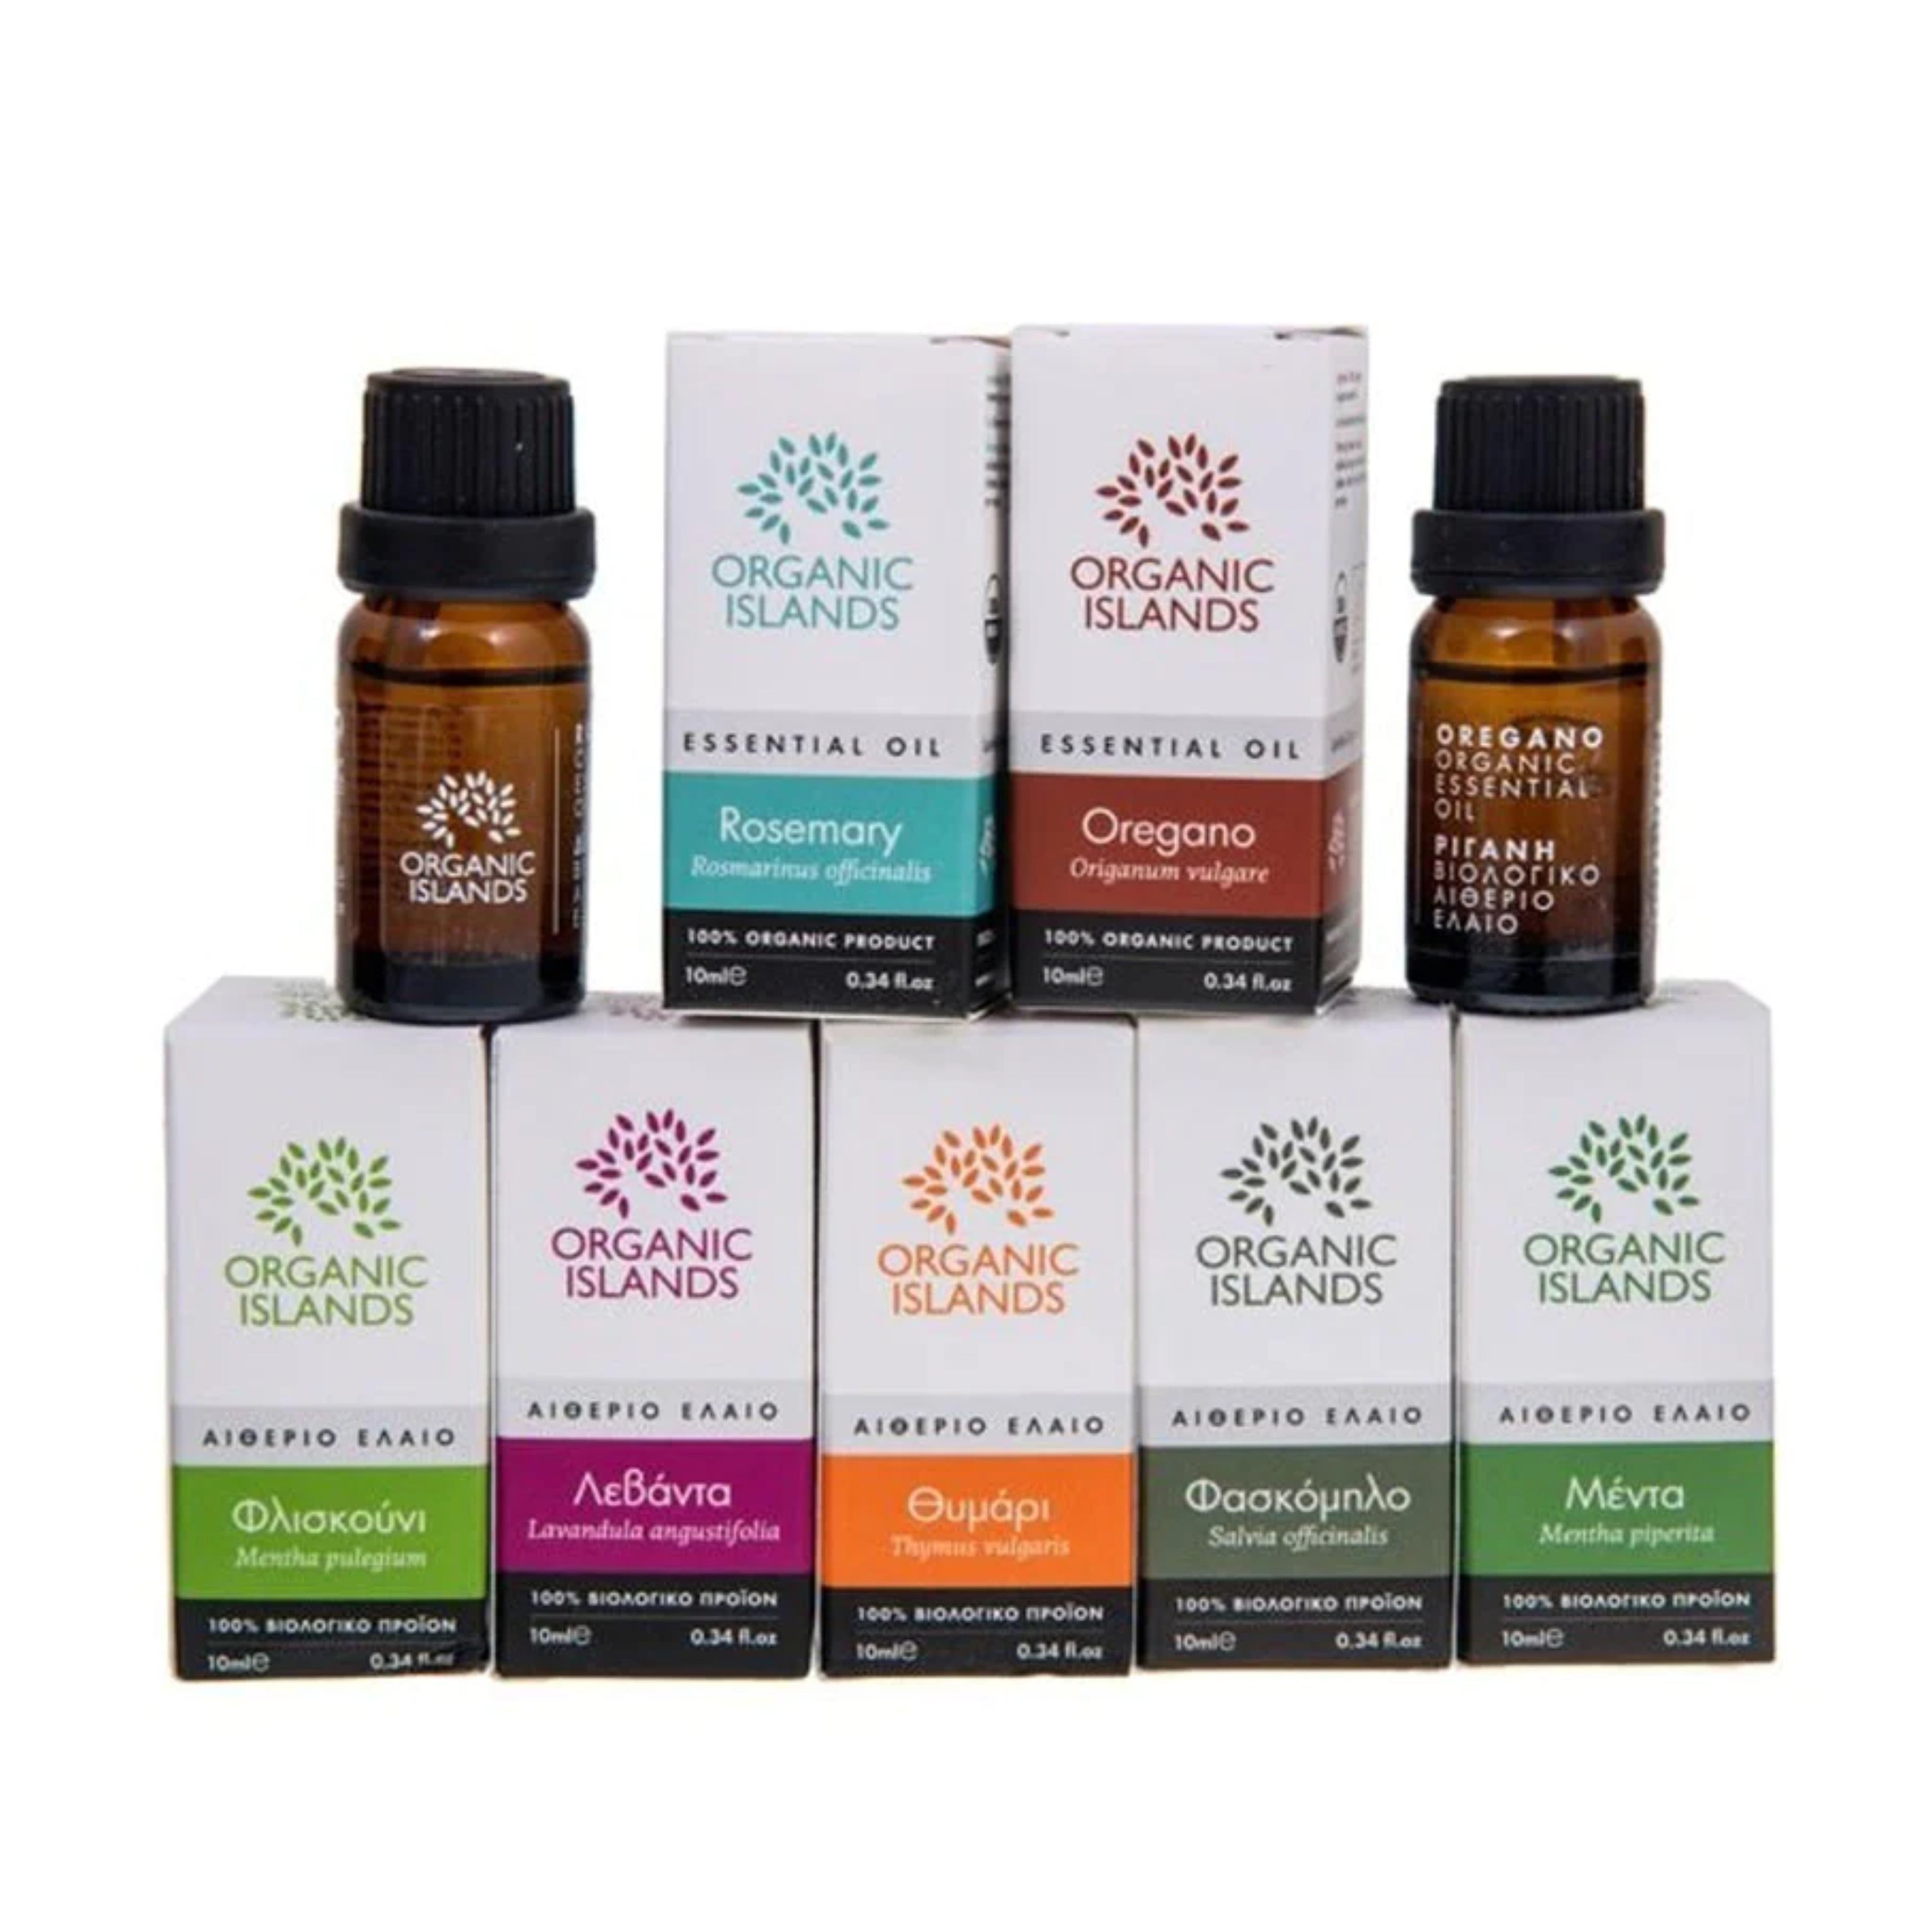 Set of 7 organic essential oils